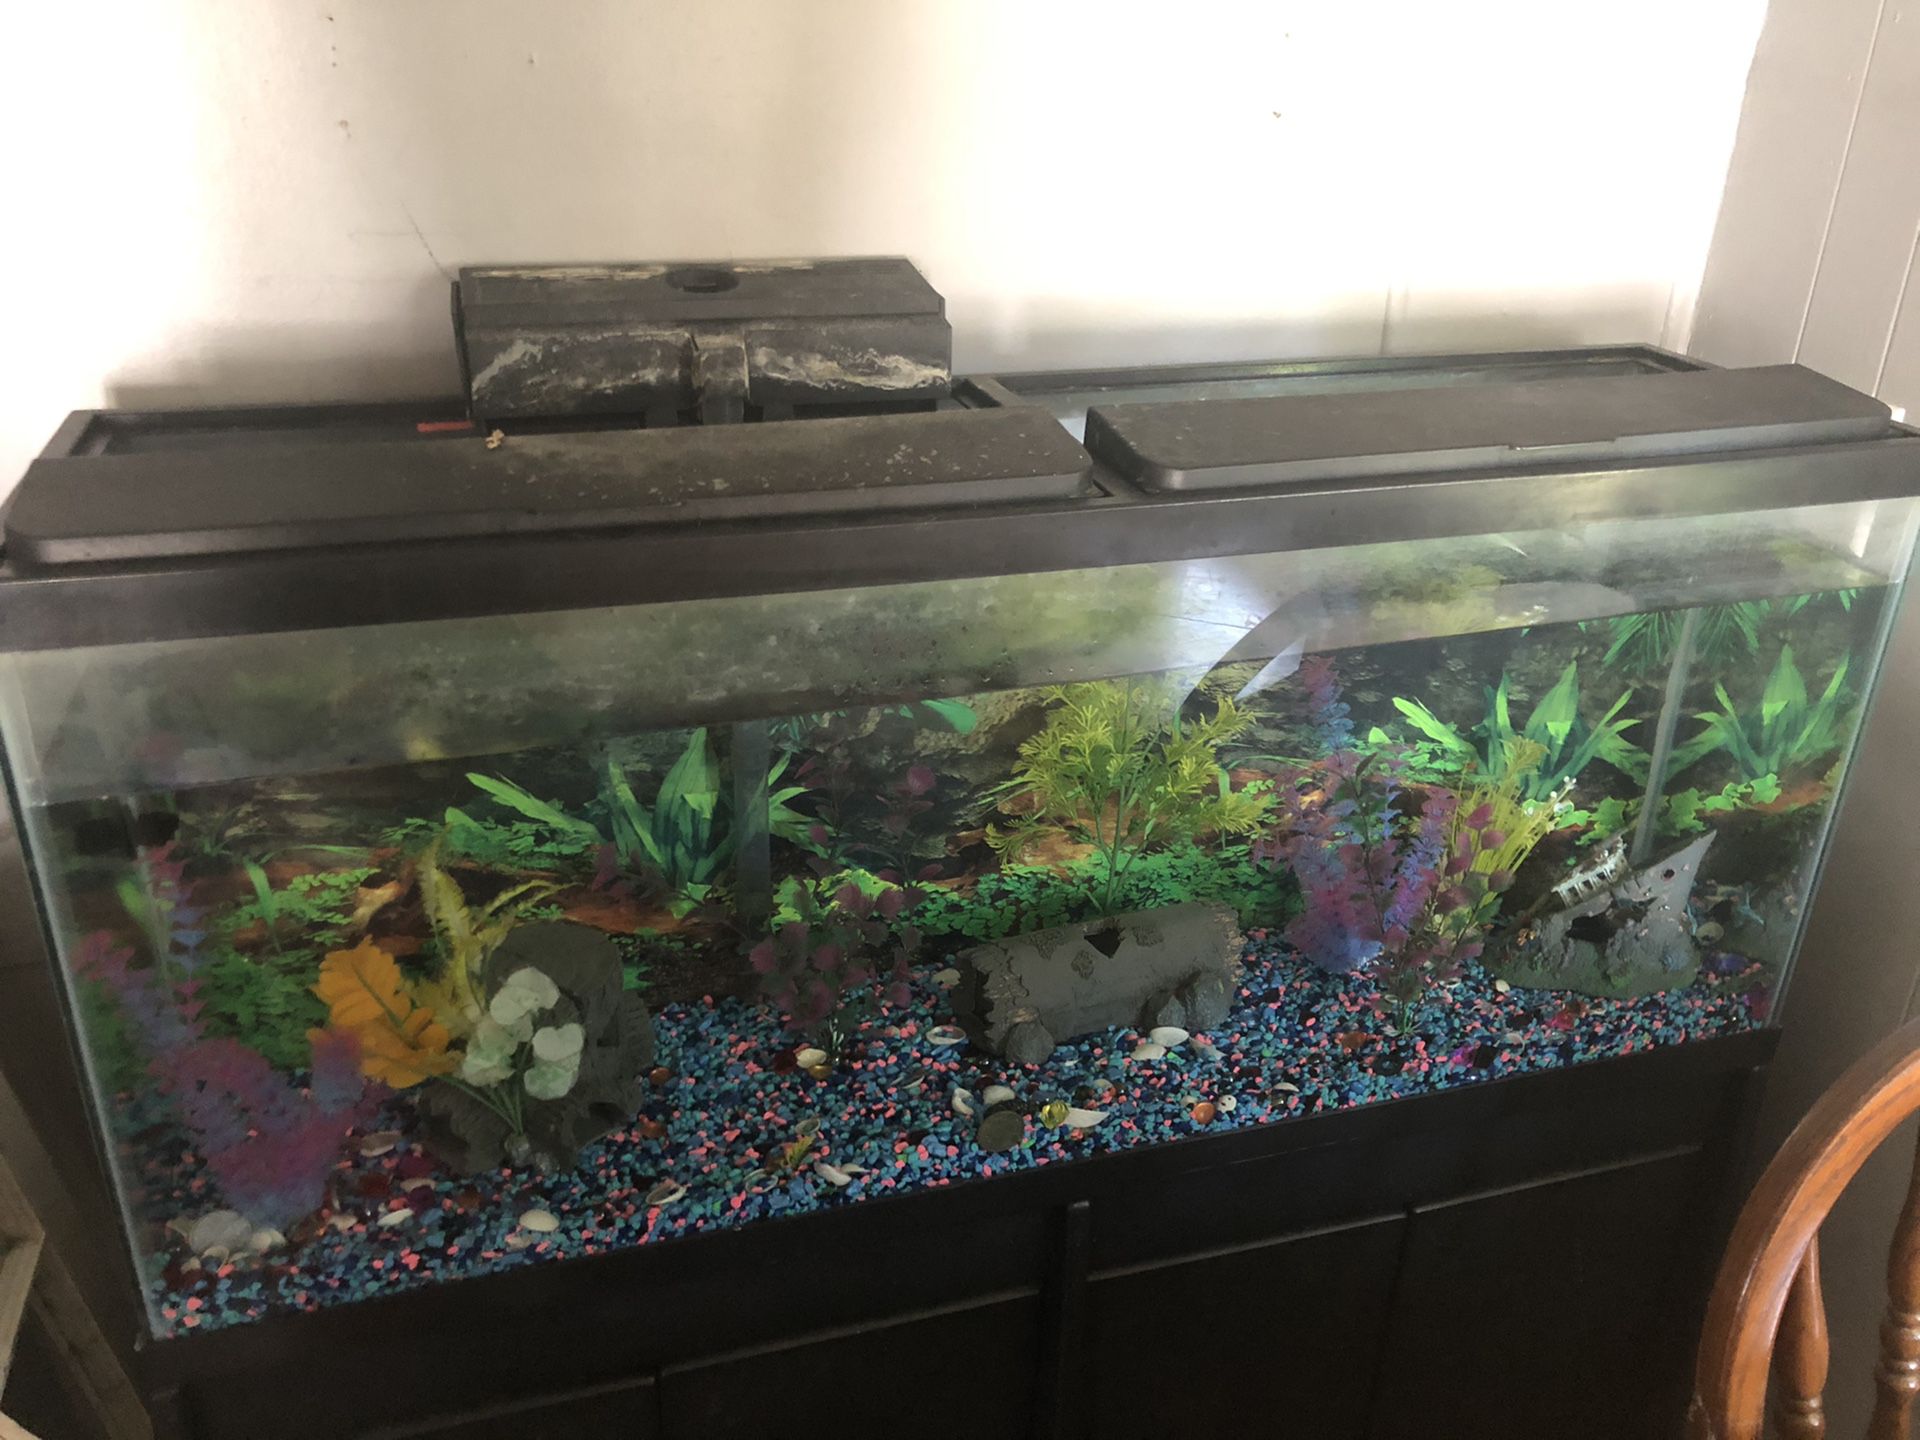 60+ gallon fish tank